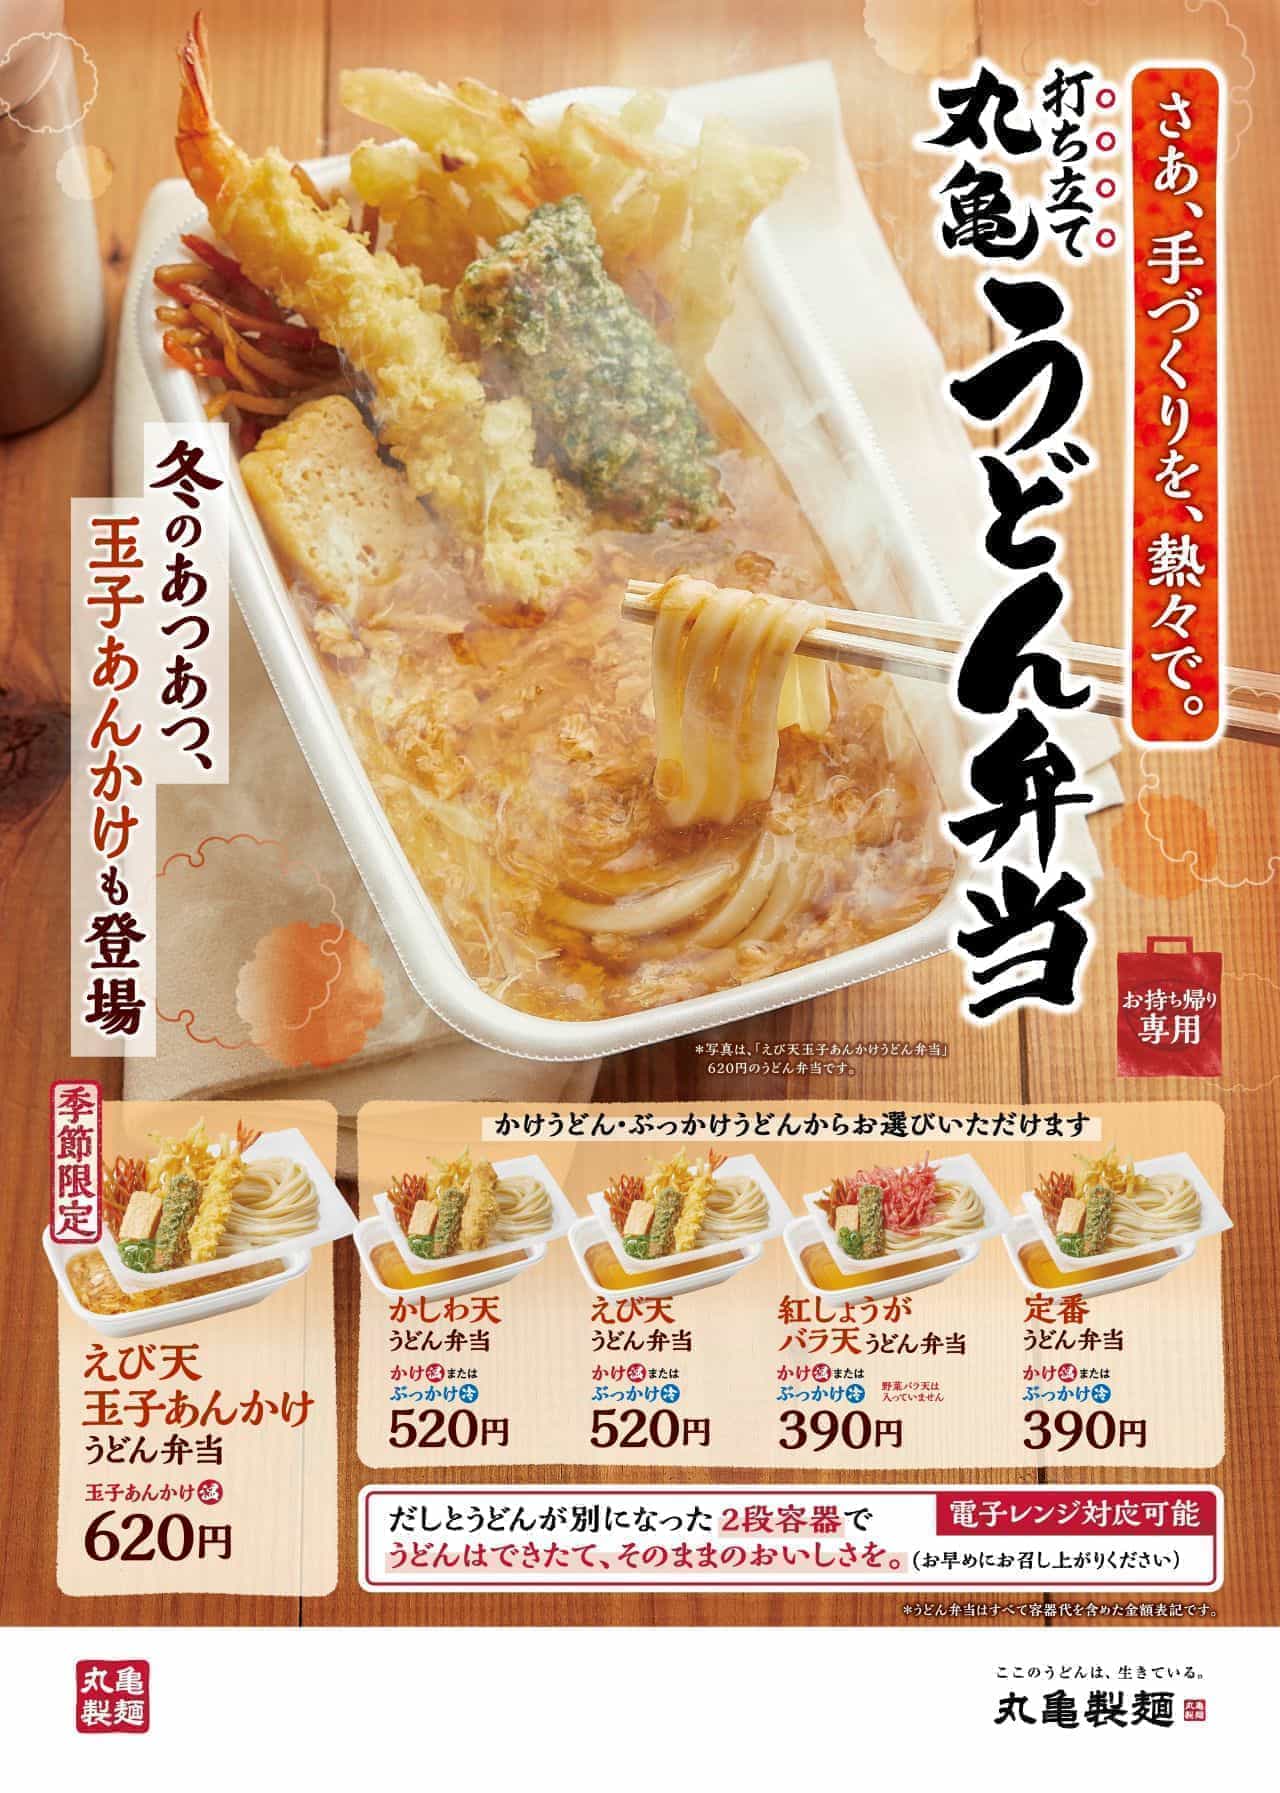 Marugame Seimen's "Shrimp Tempura Tamago Ankake Udon Lunchbox